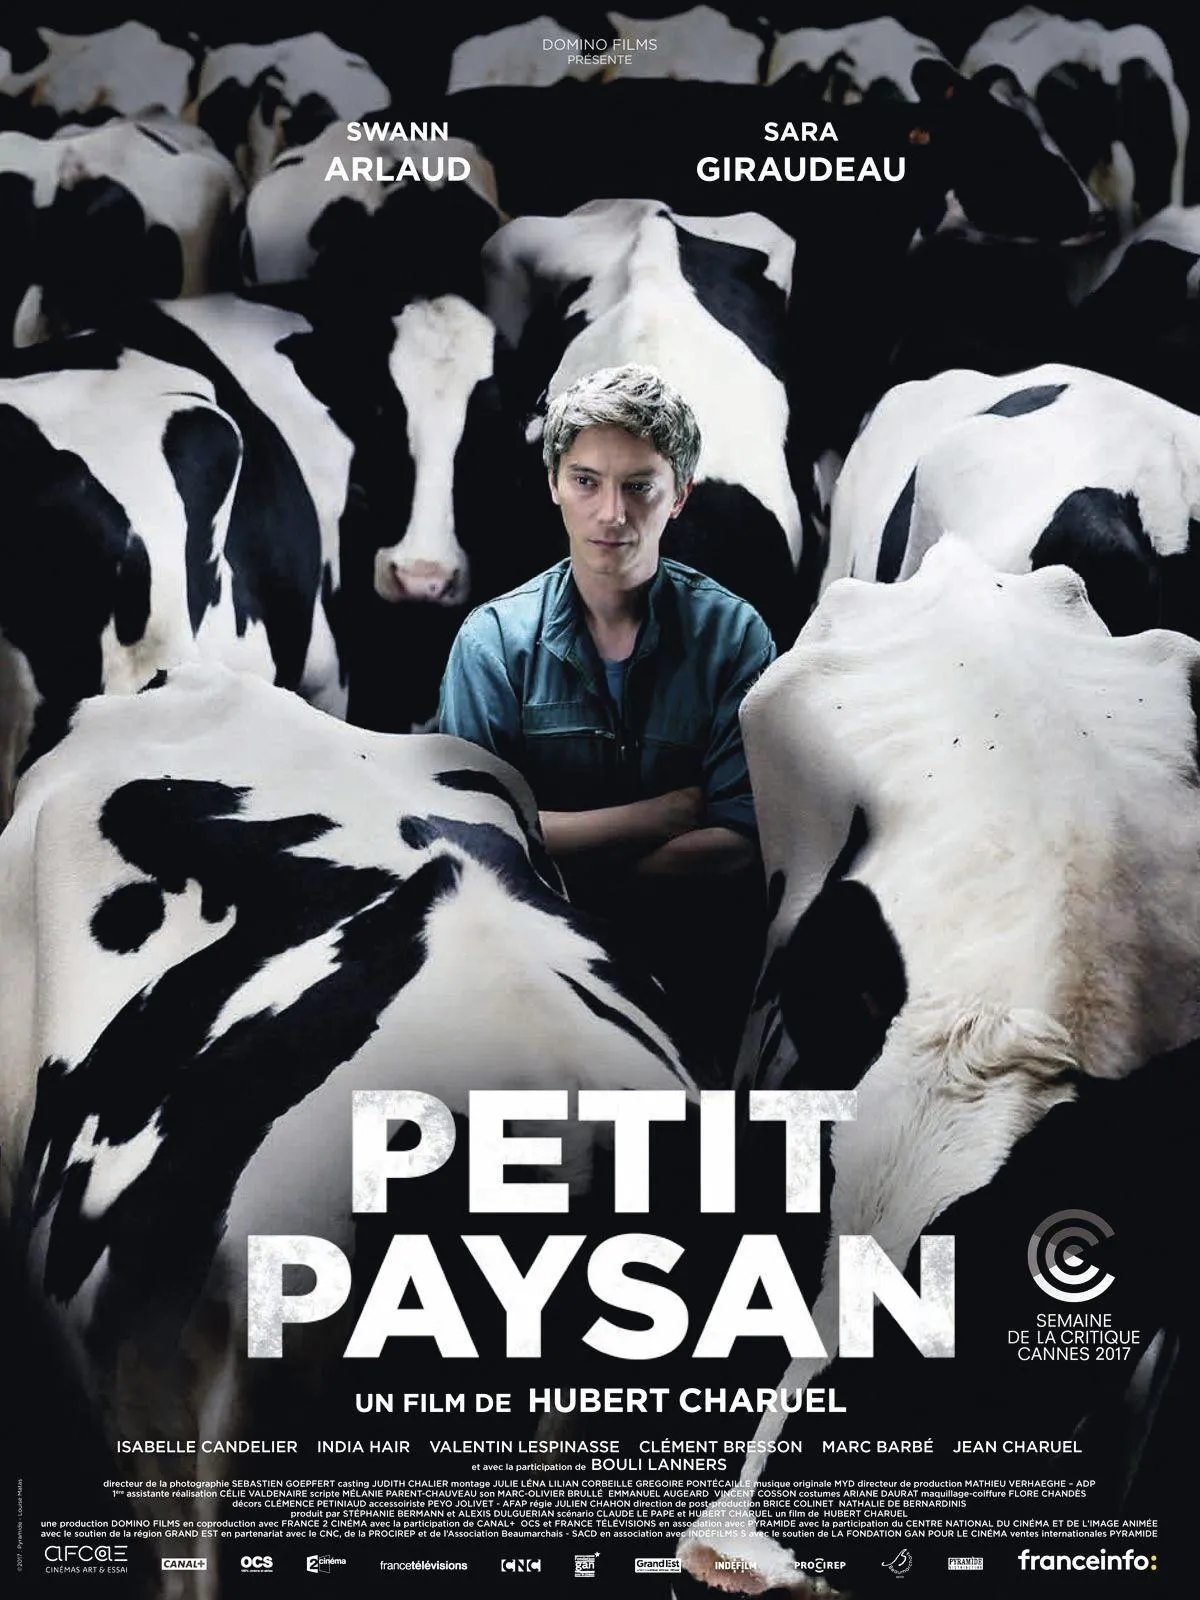 Hubert Charuel, Petit paysan, 2017.